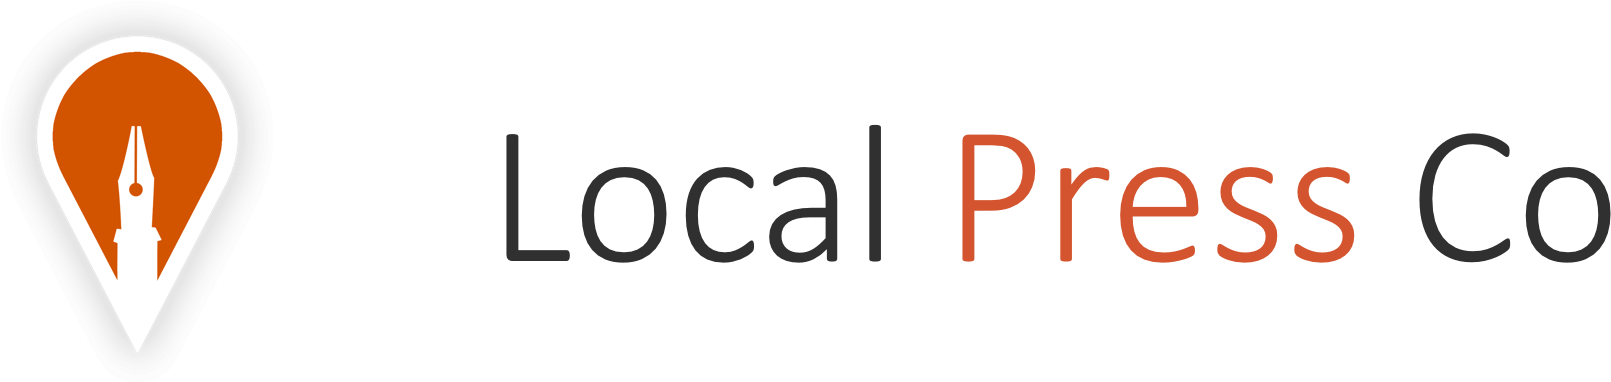 Local Press Co Logo - Line Art (1920x458)